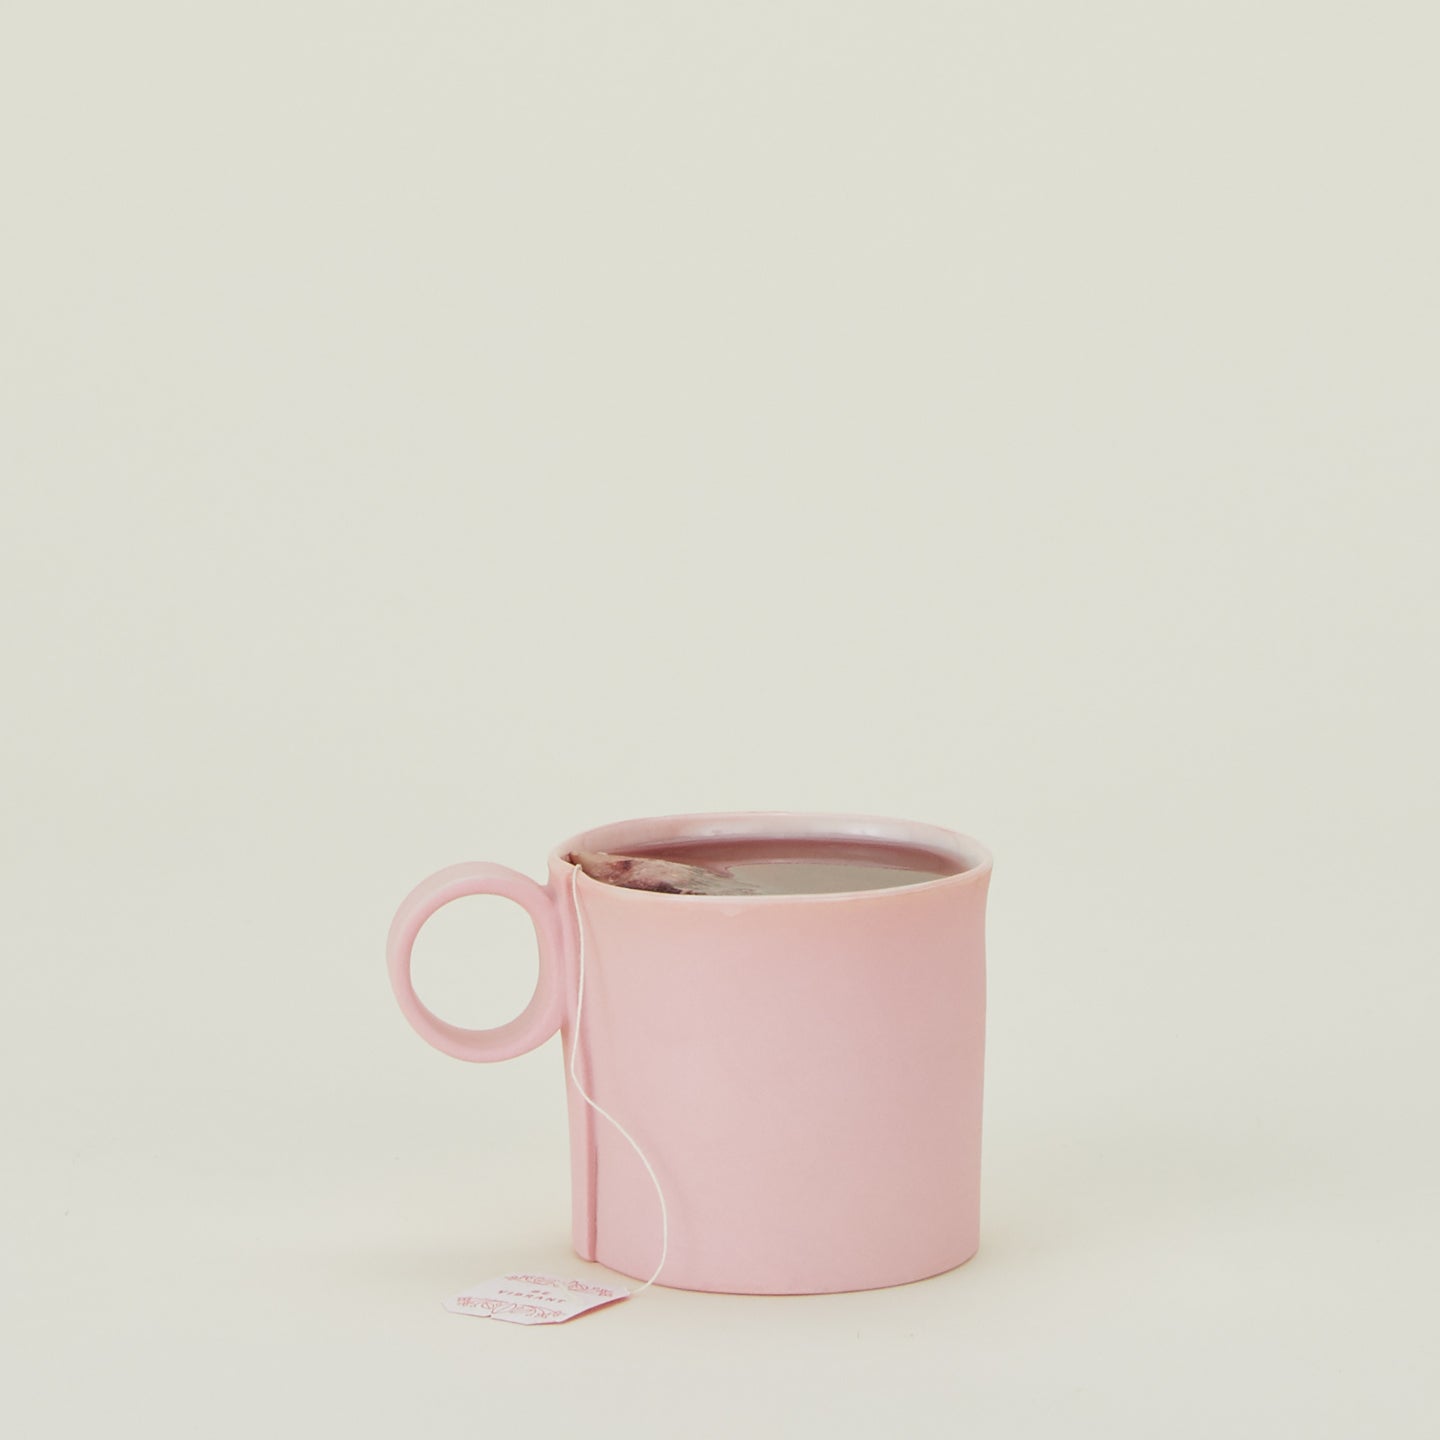 Loop Handled Mug in Blush, with tea.